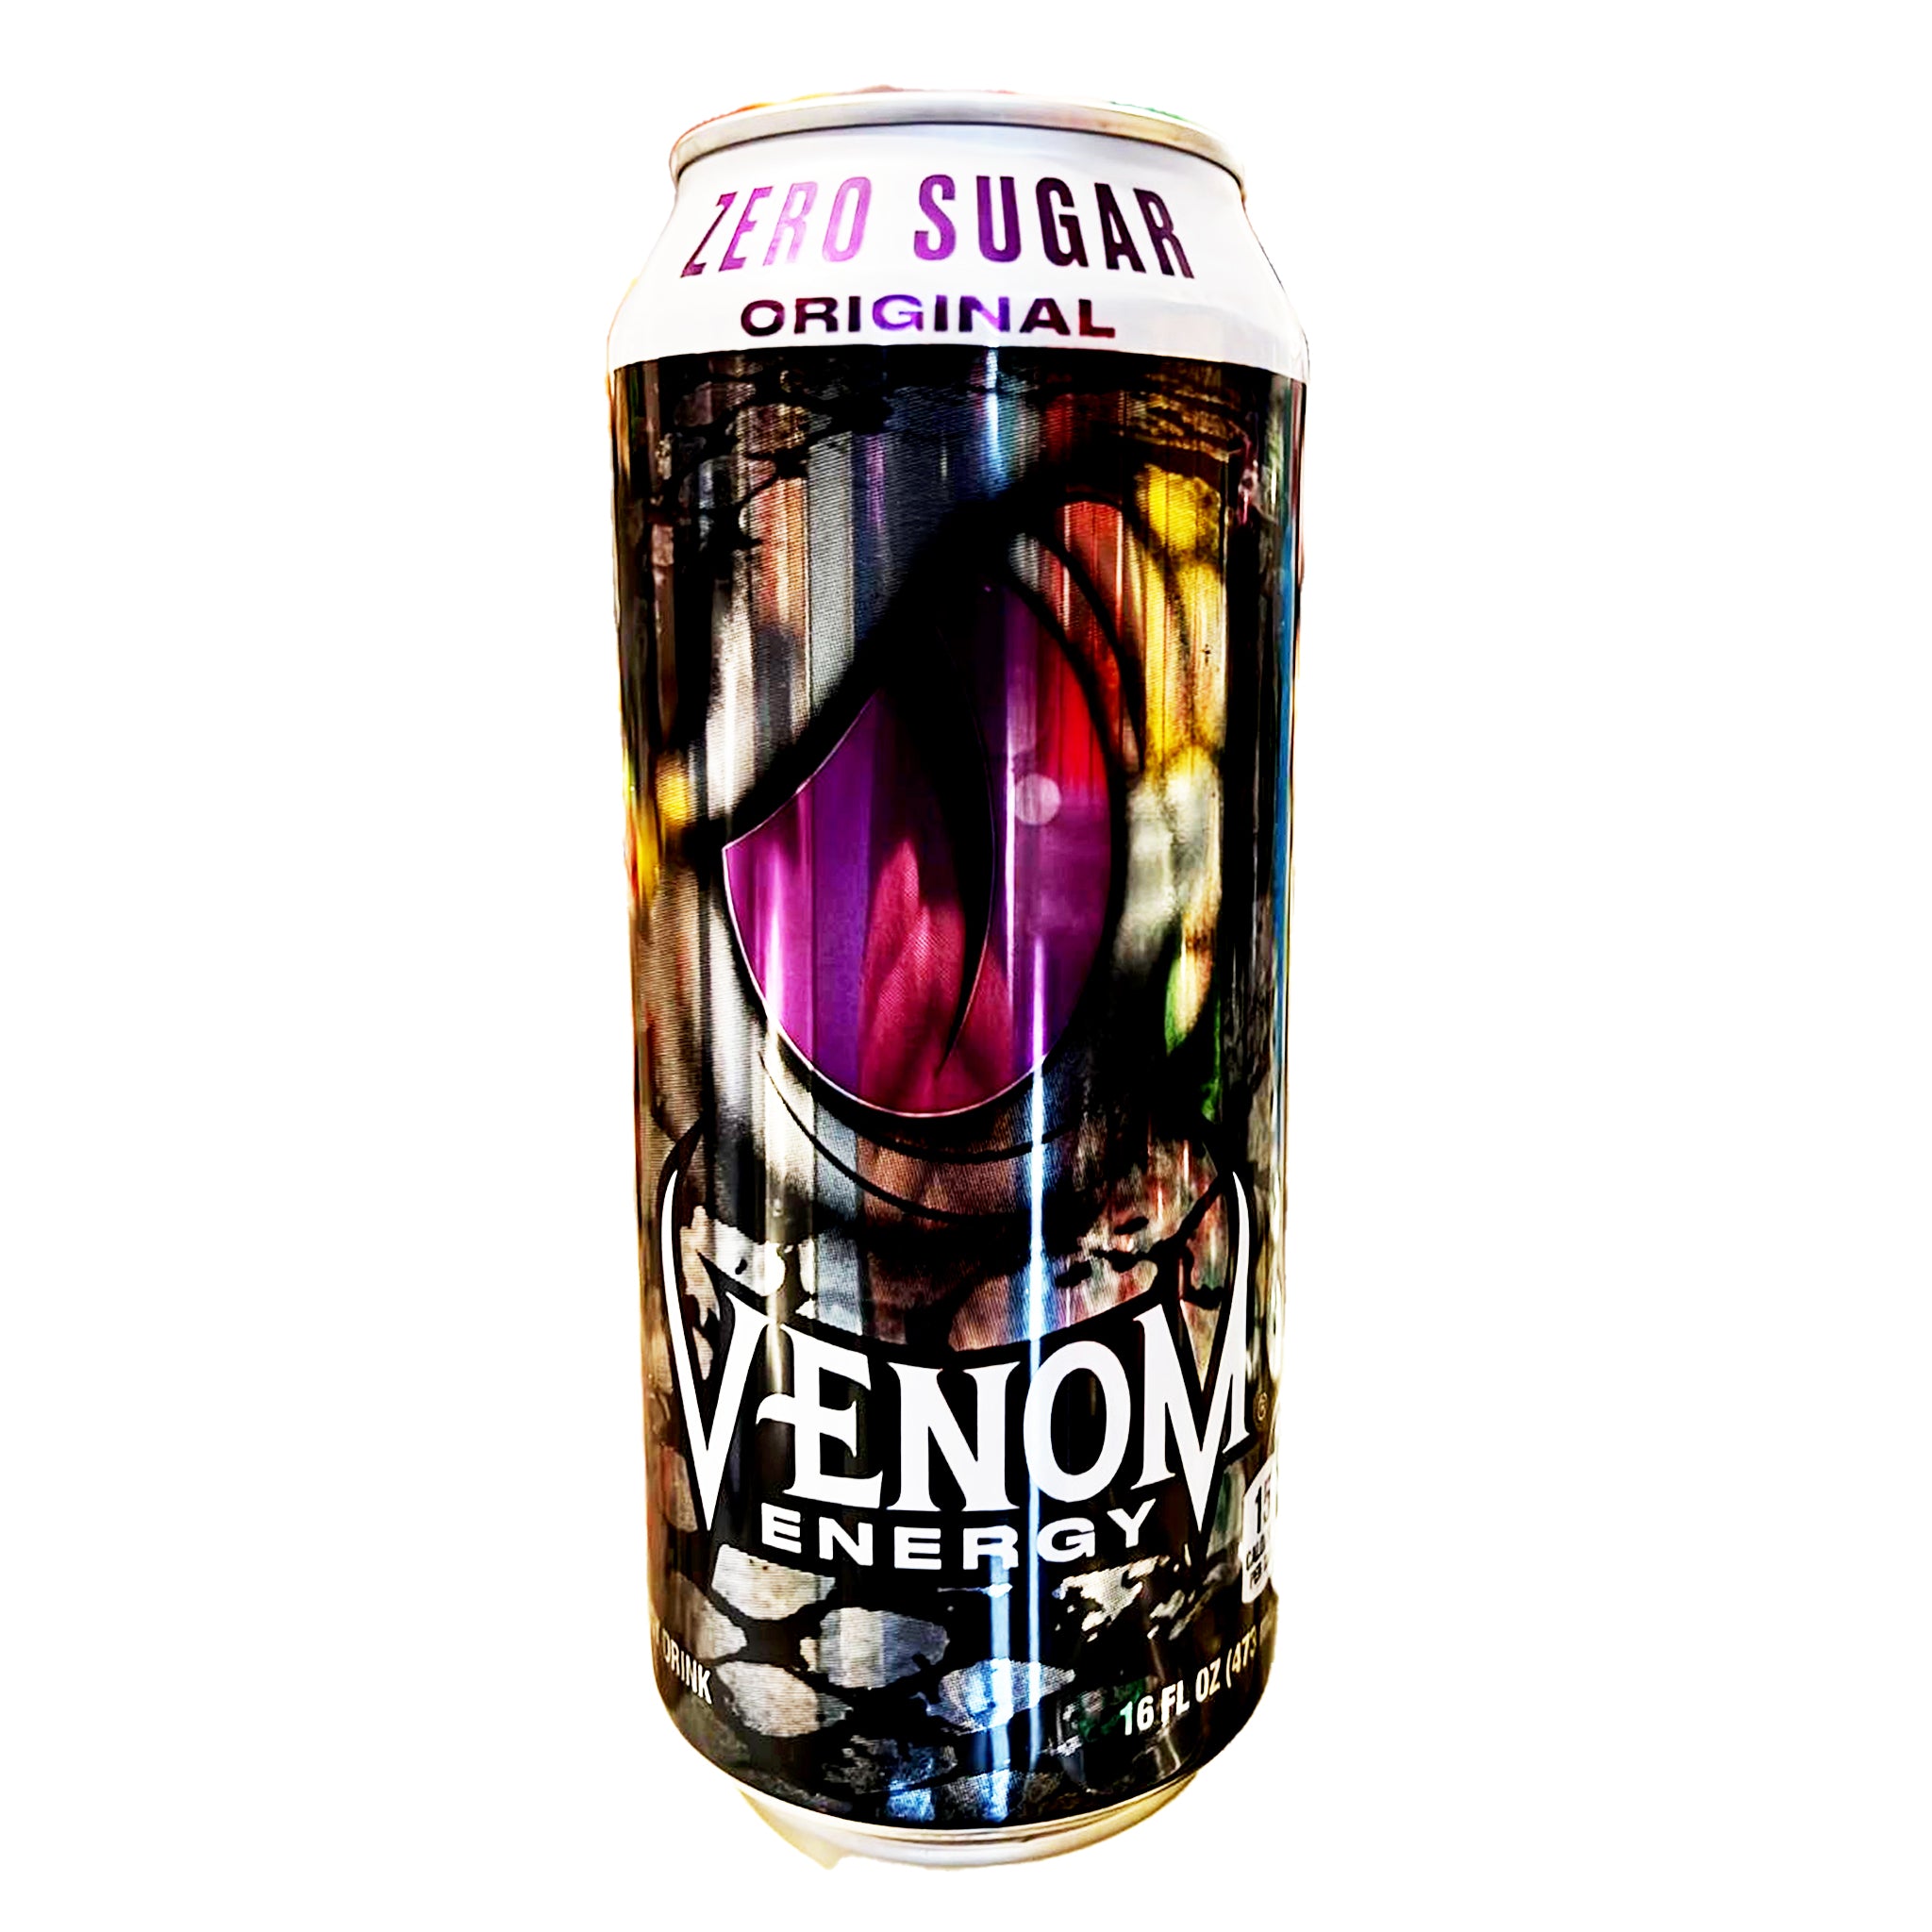 Venom Energy Drink Original Zero ונום משקה אנרגיה זירו